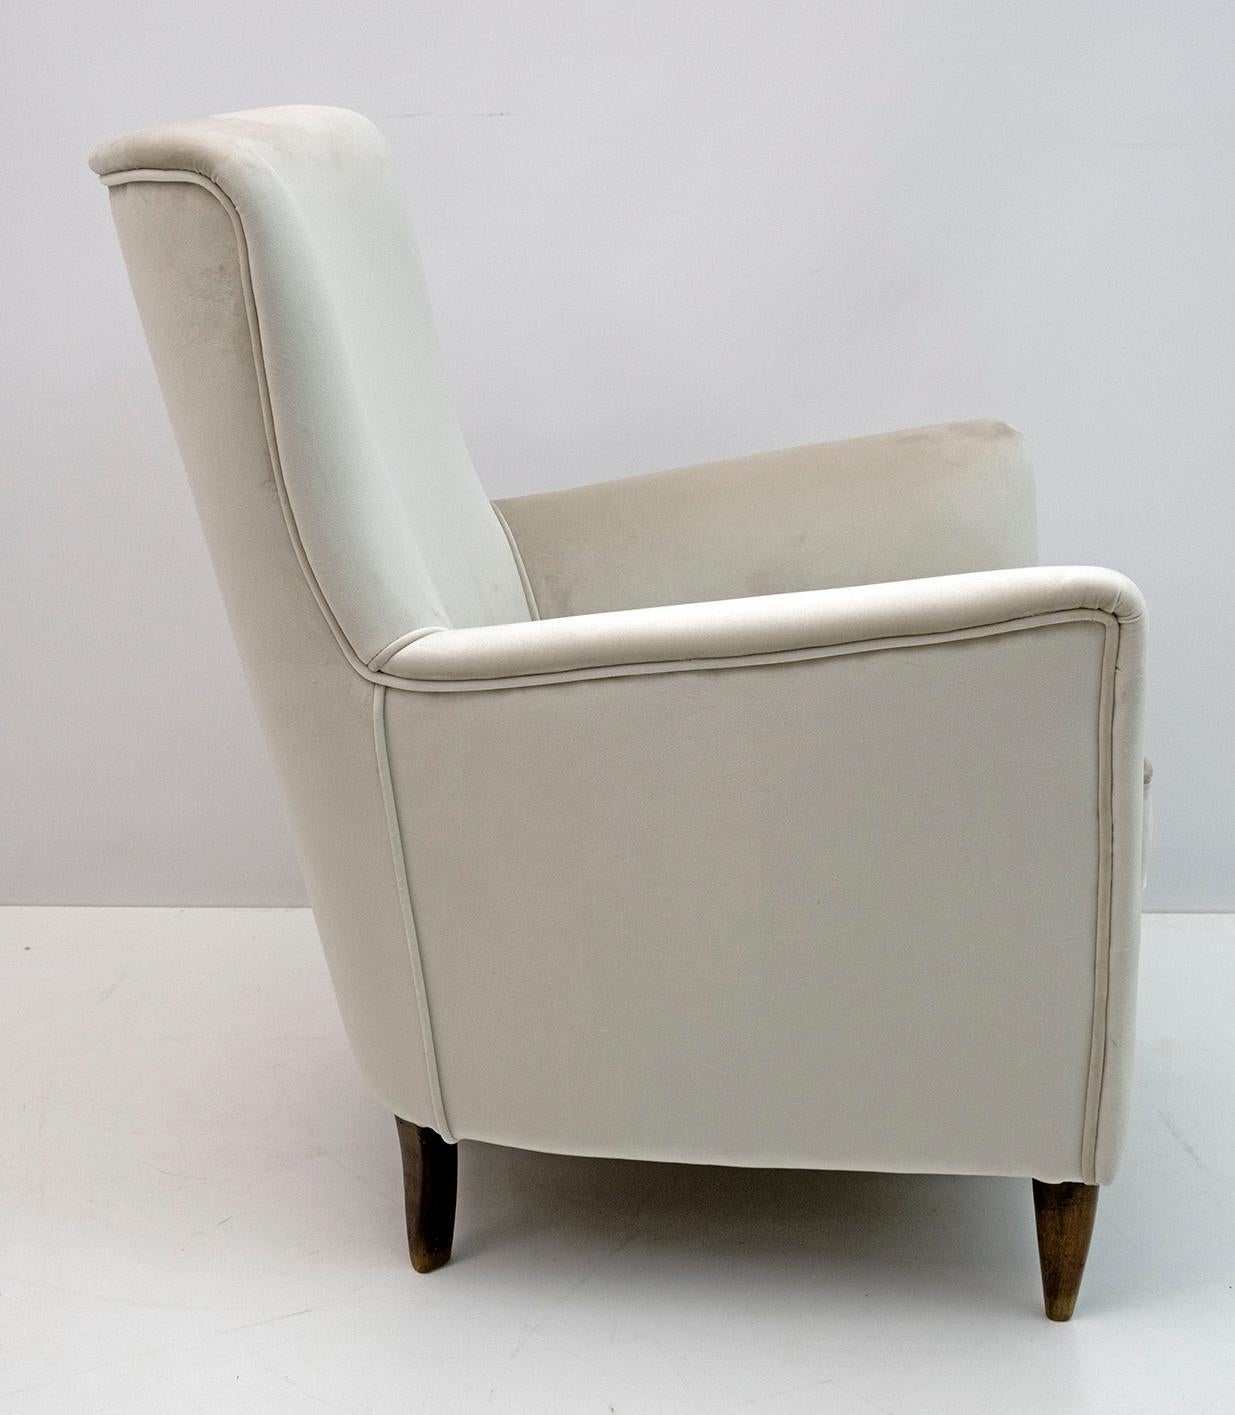 Pair of Gio Ponti Style Mid-Century Modern Italian Velvet Armchairs for Isa, 50s For Sale 3